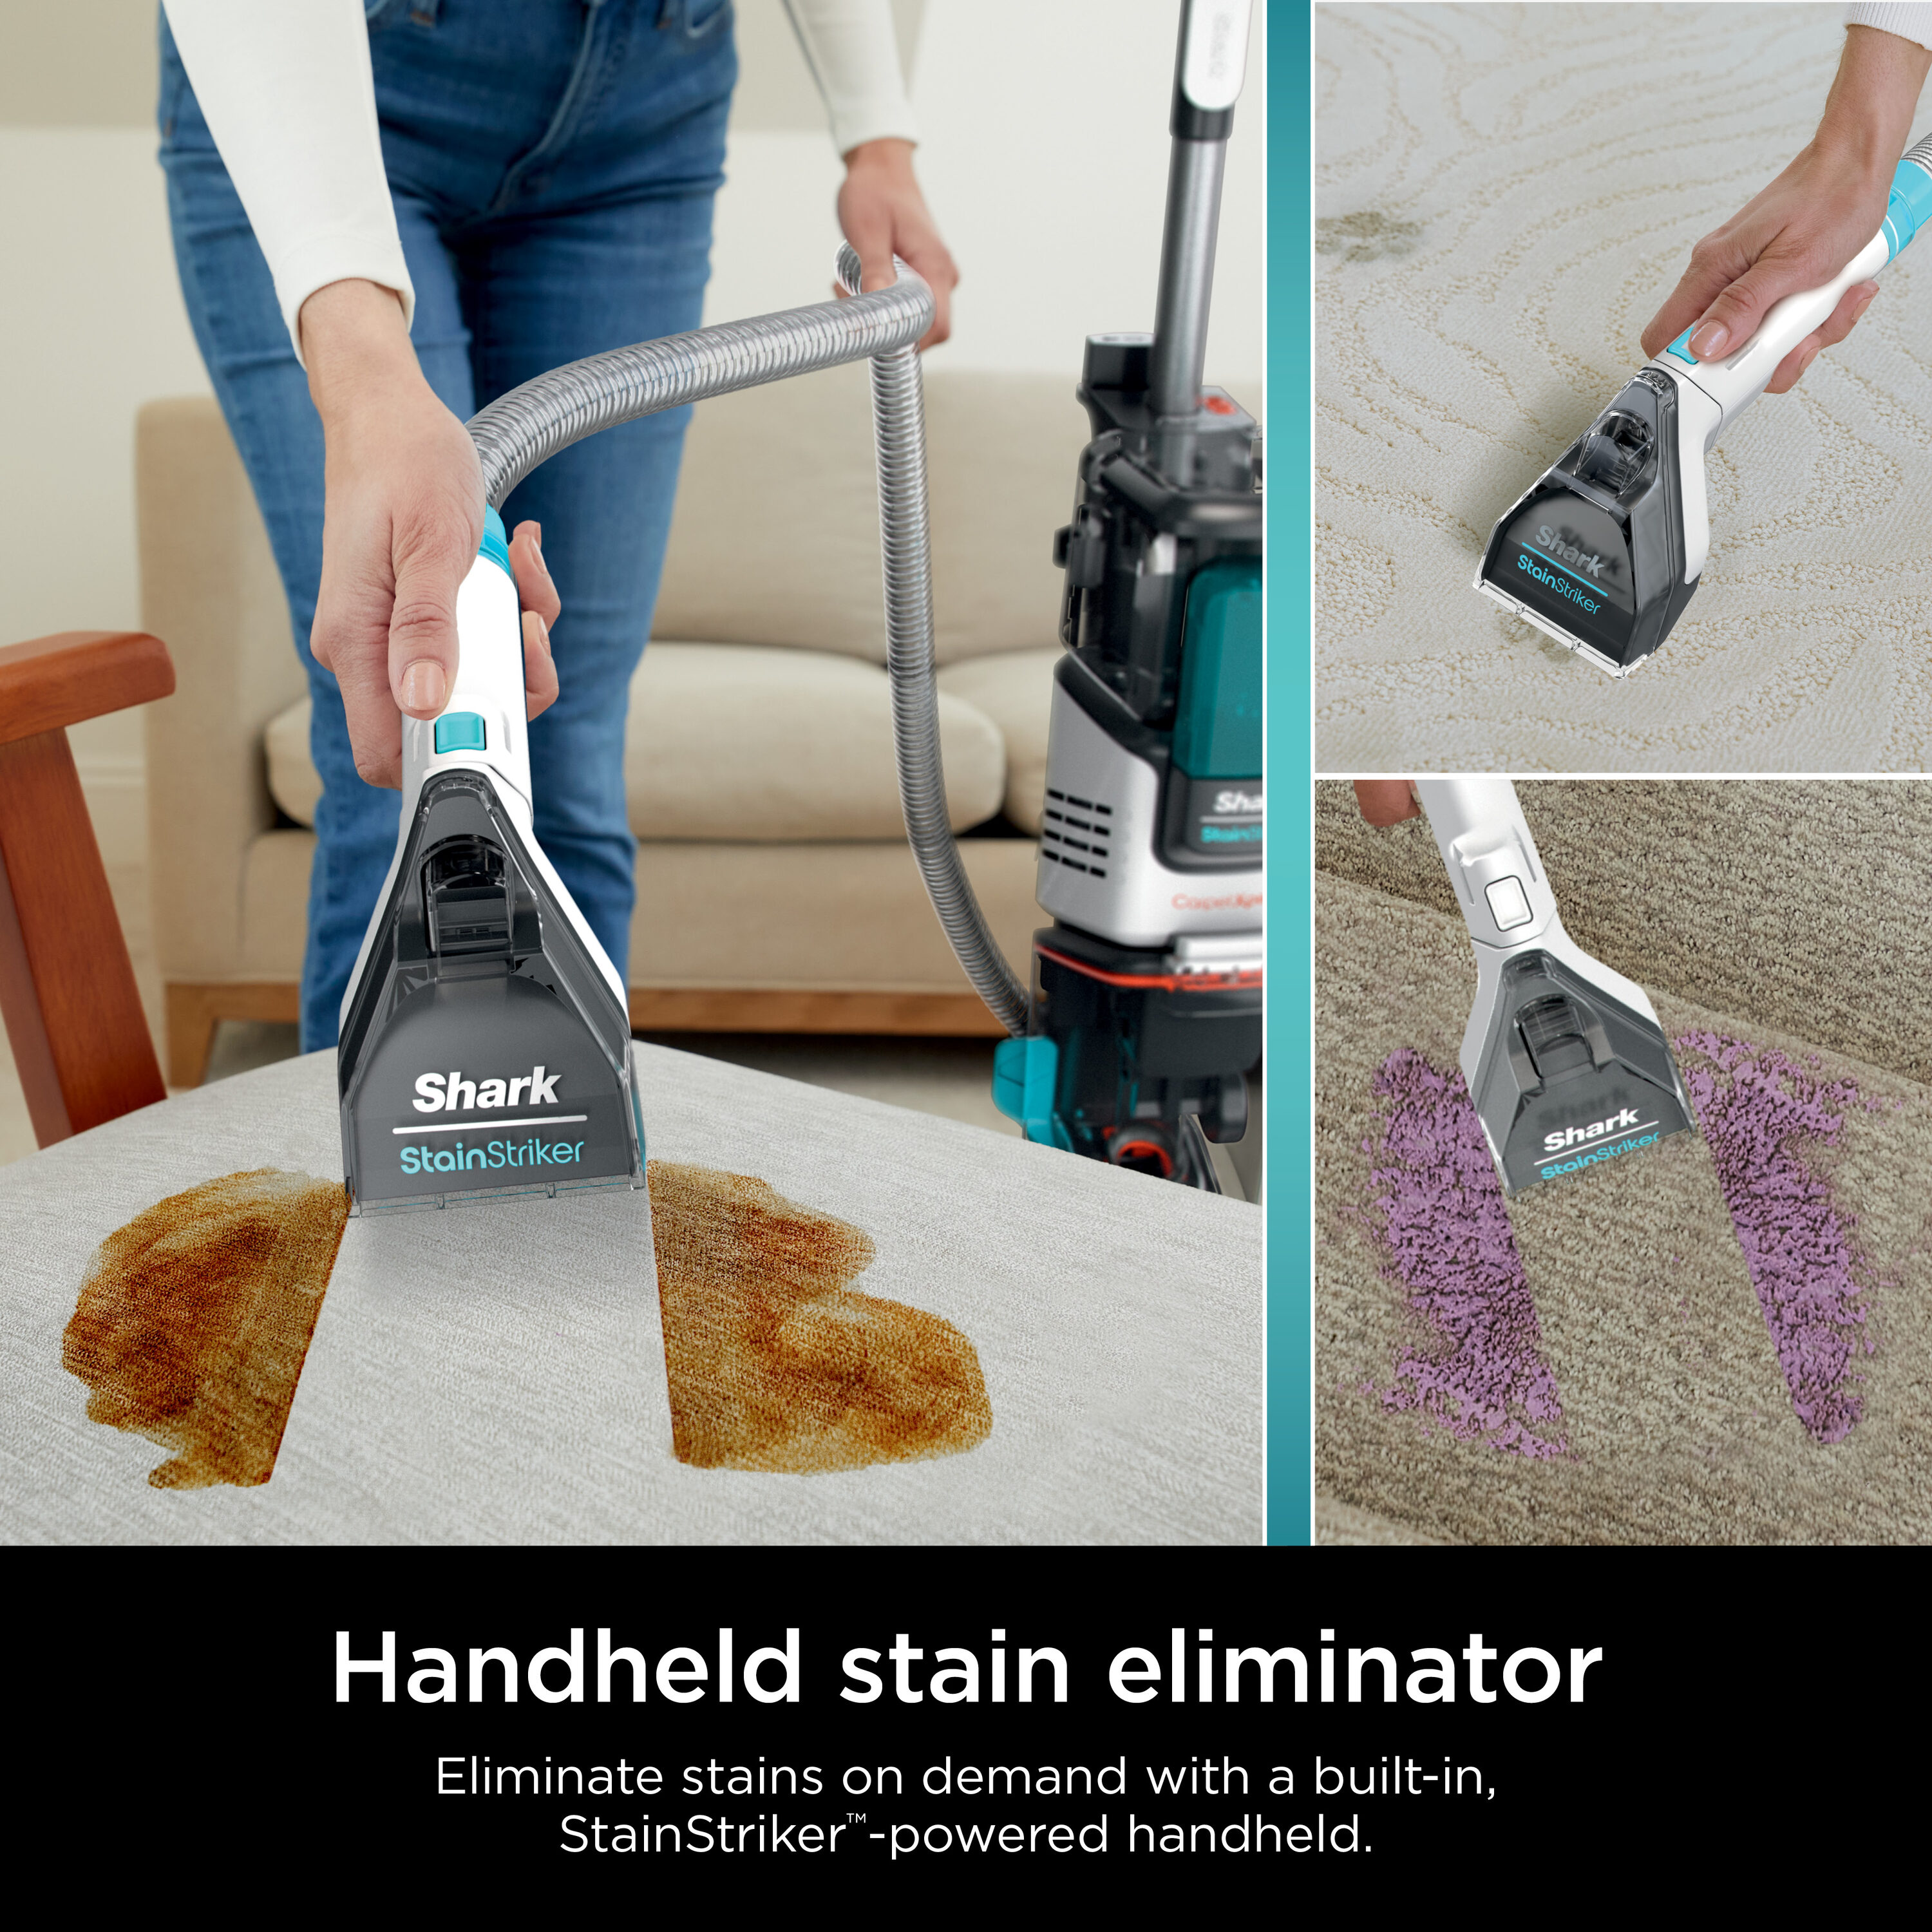 Shark® CarpetXpert™ with Stainstriker™ Carpet Cleaner Ultimate True Pet  Package